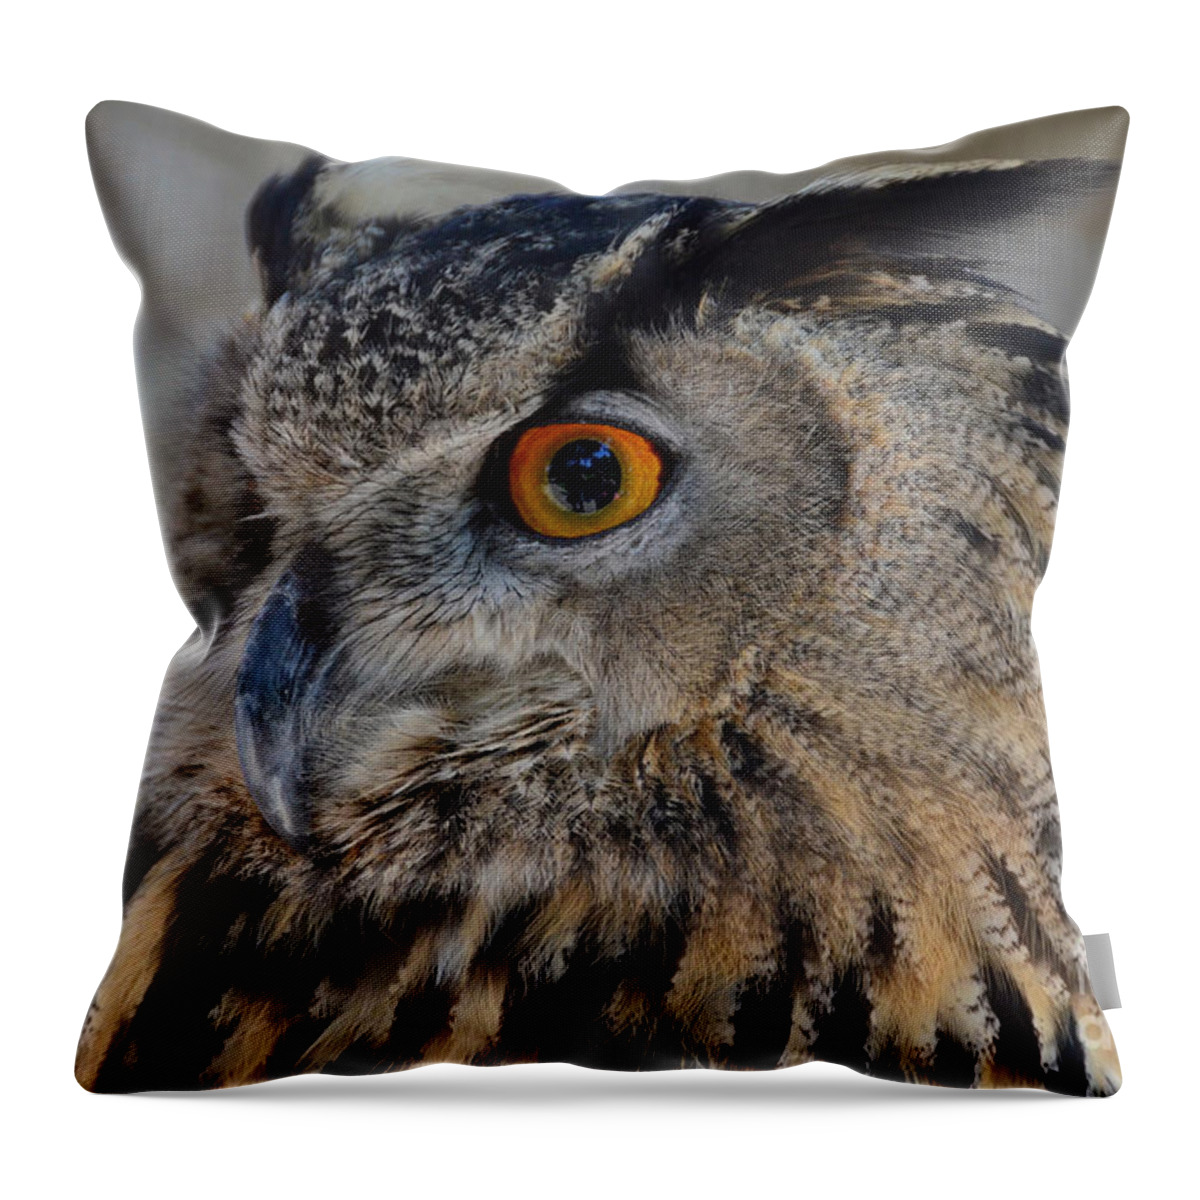 Owl Throw Pillow featuring the photograph Eurasian Owl by Debby Pueschel